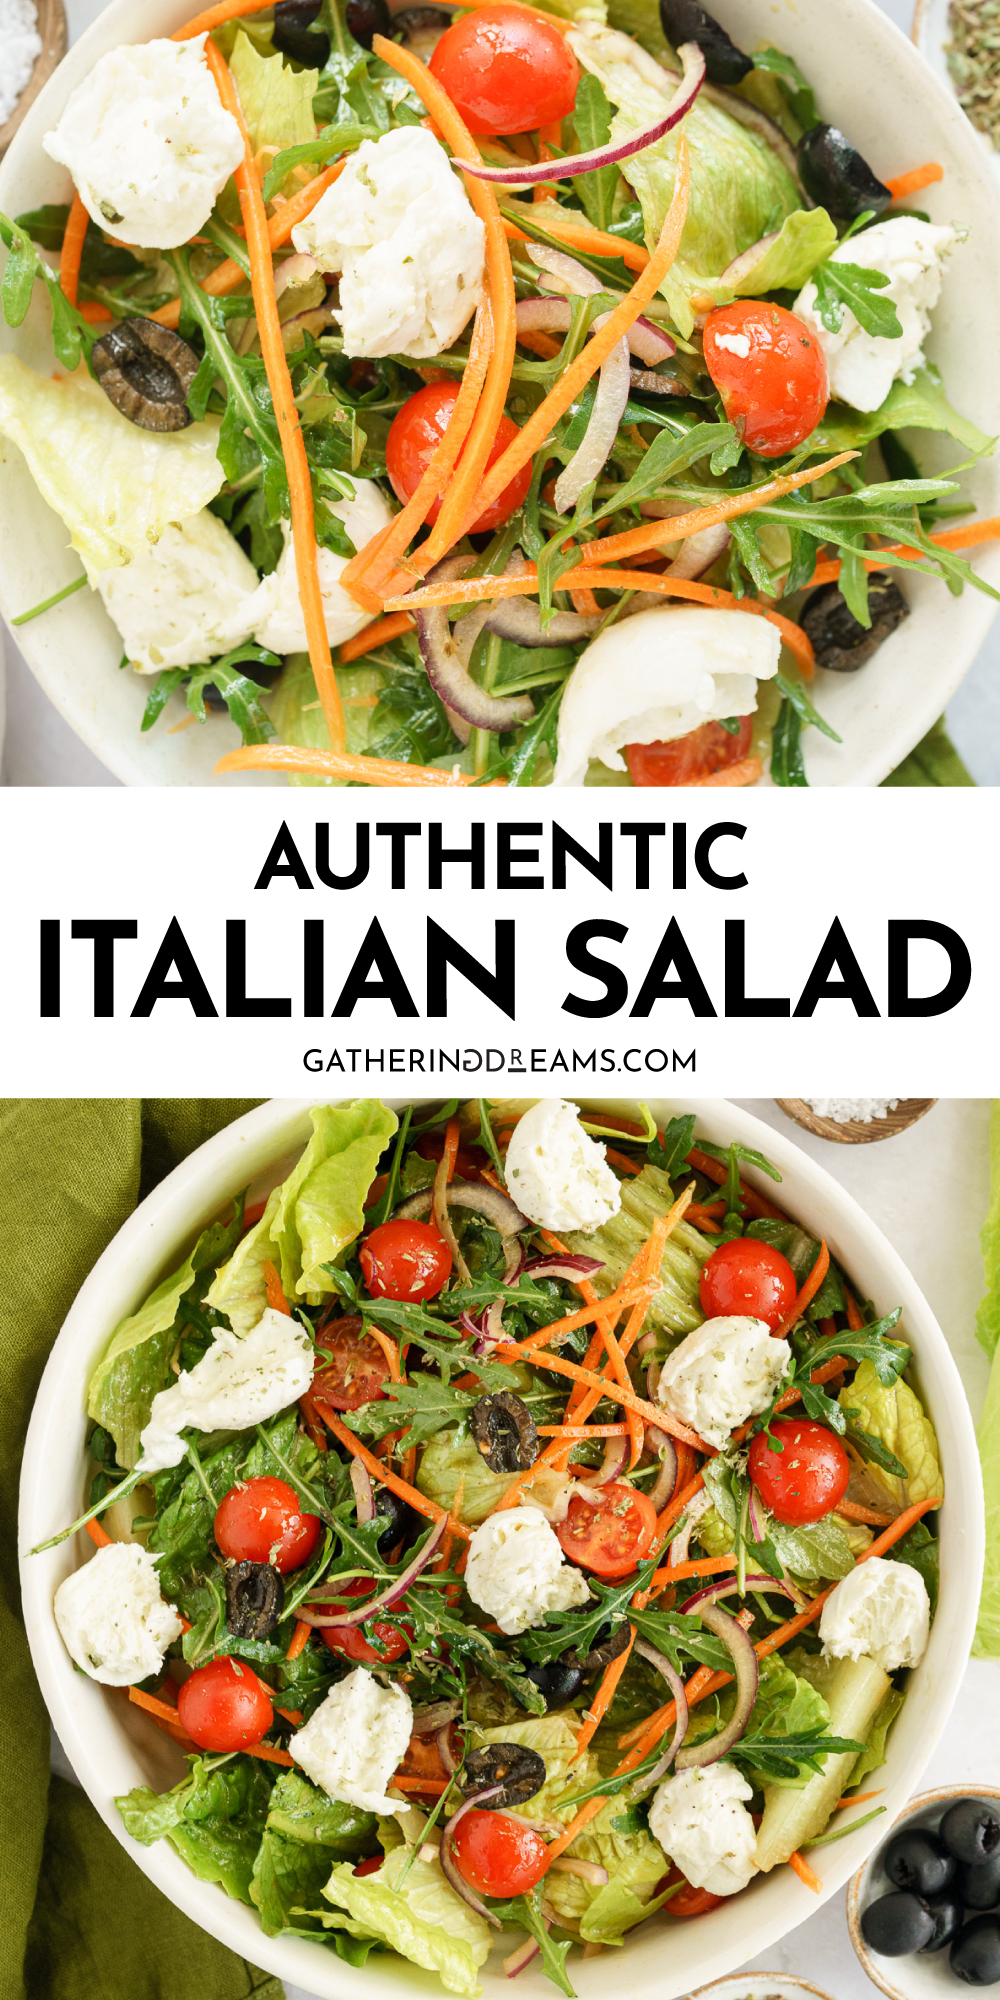 Authentic Italian Salad Recipe - Gathering Dreams